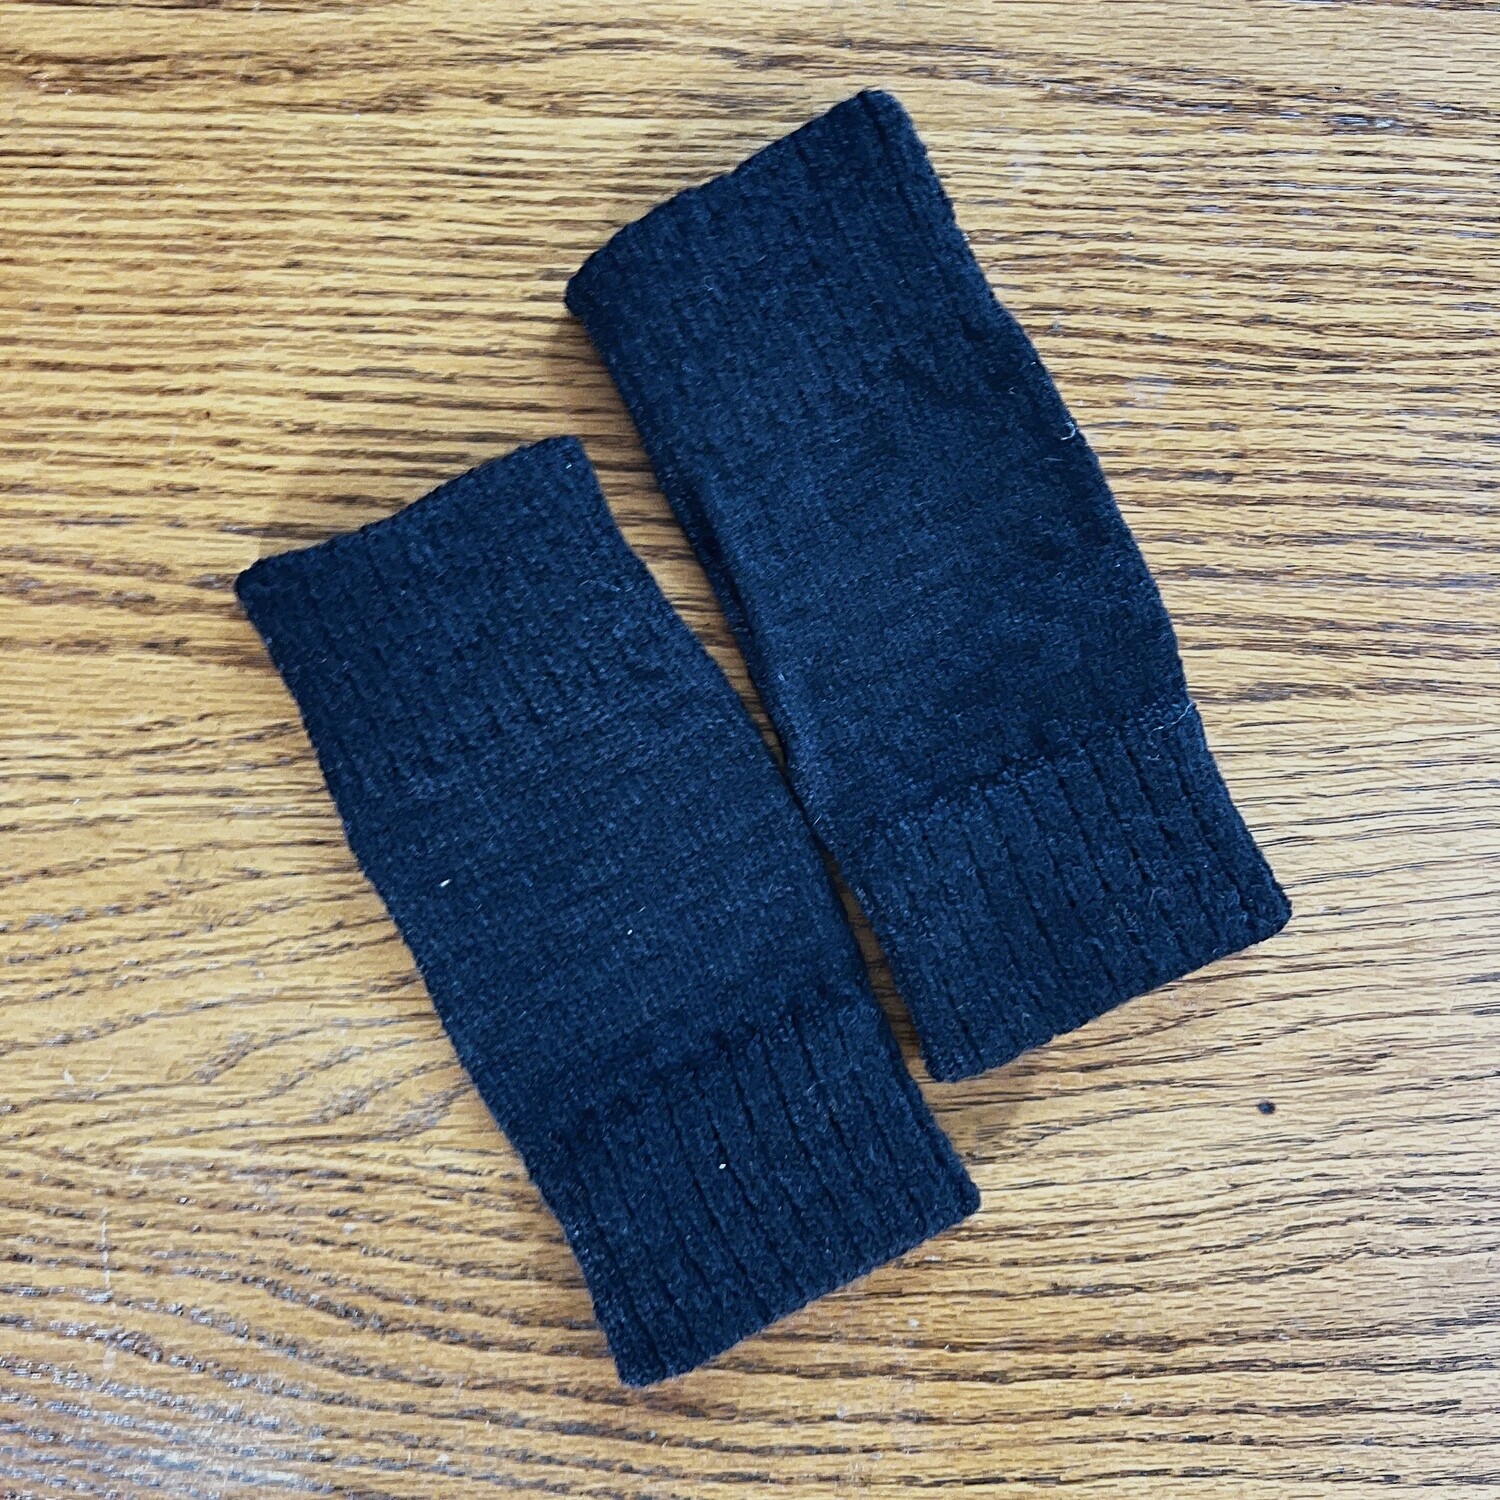 Fingerless Mitts - Deep Black - Wool Free - one size